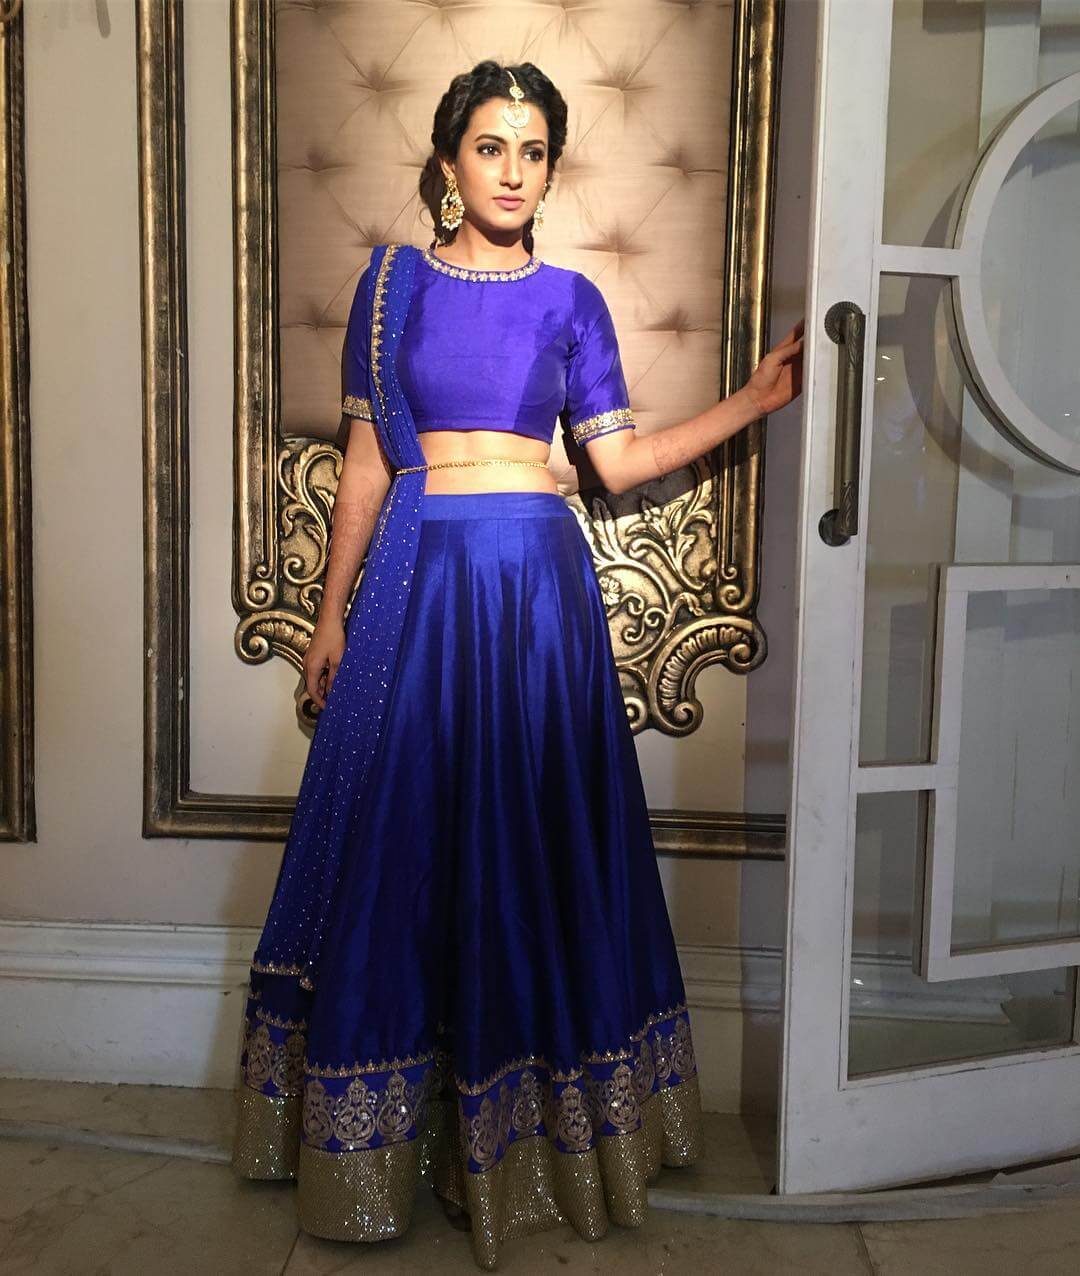 TV Actress Additi Gupta In Royal Blue Lehenga With Detailed Bottom